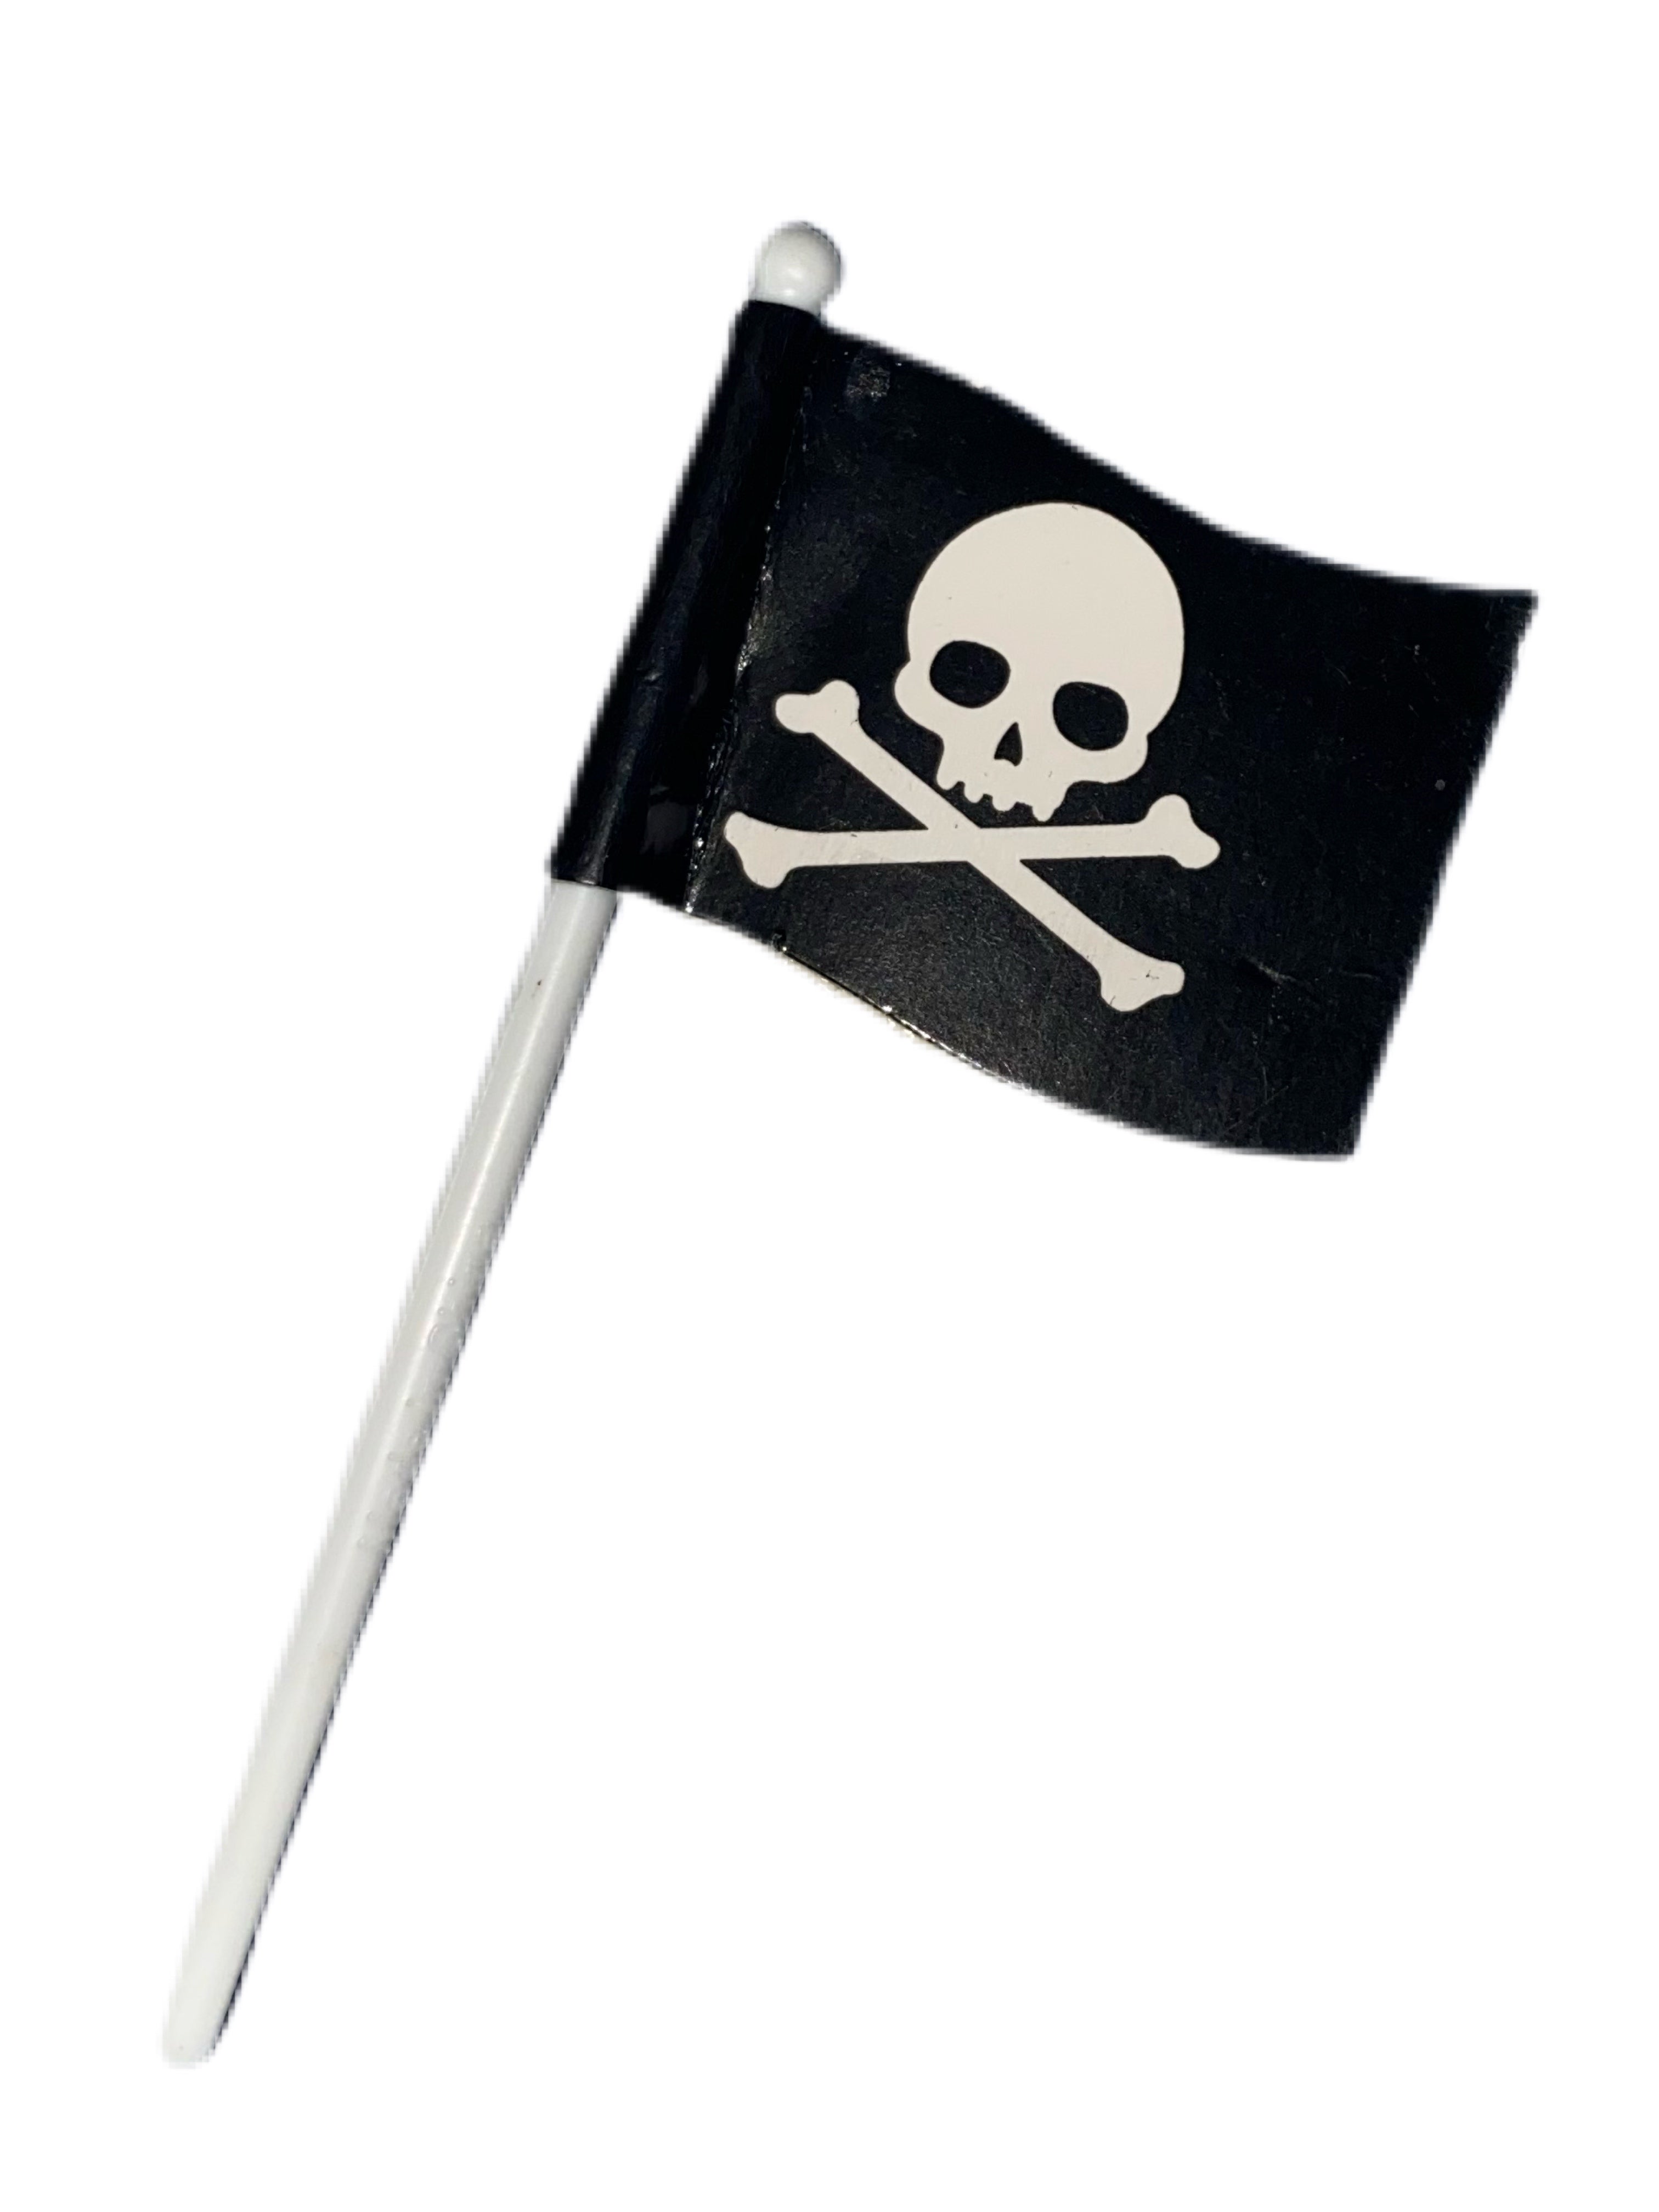 Pirate Skull and Cross Bones Flag Cupcake or Cake Topper Pic - The Cooks Cupboard Ltd